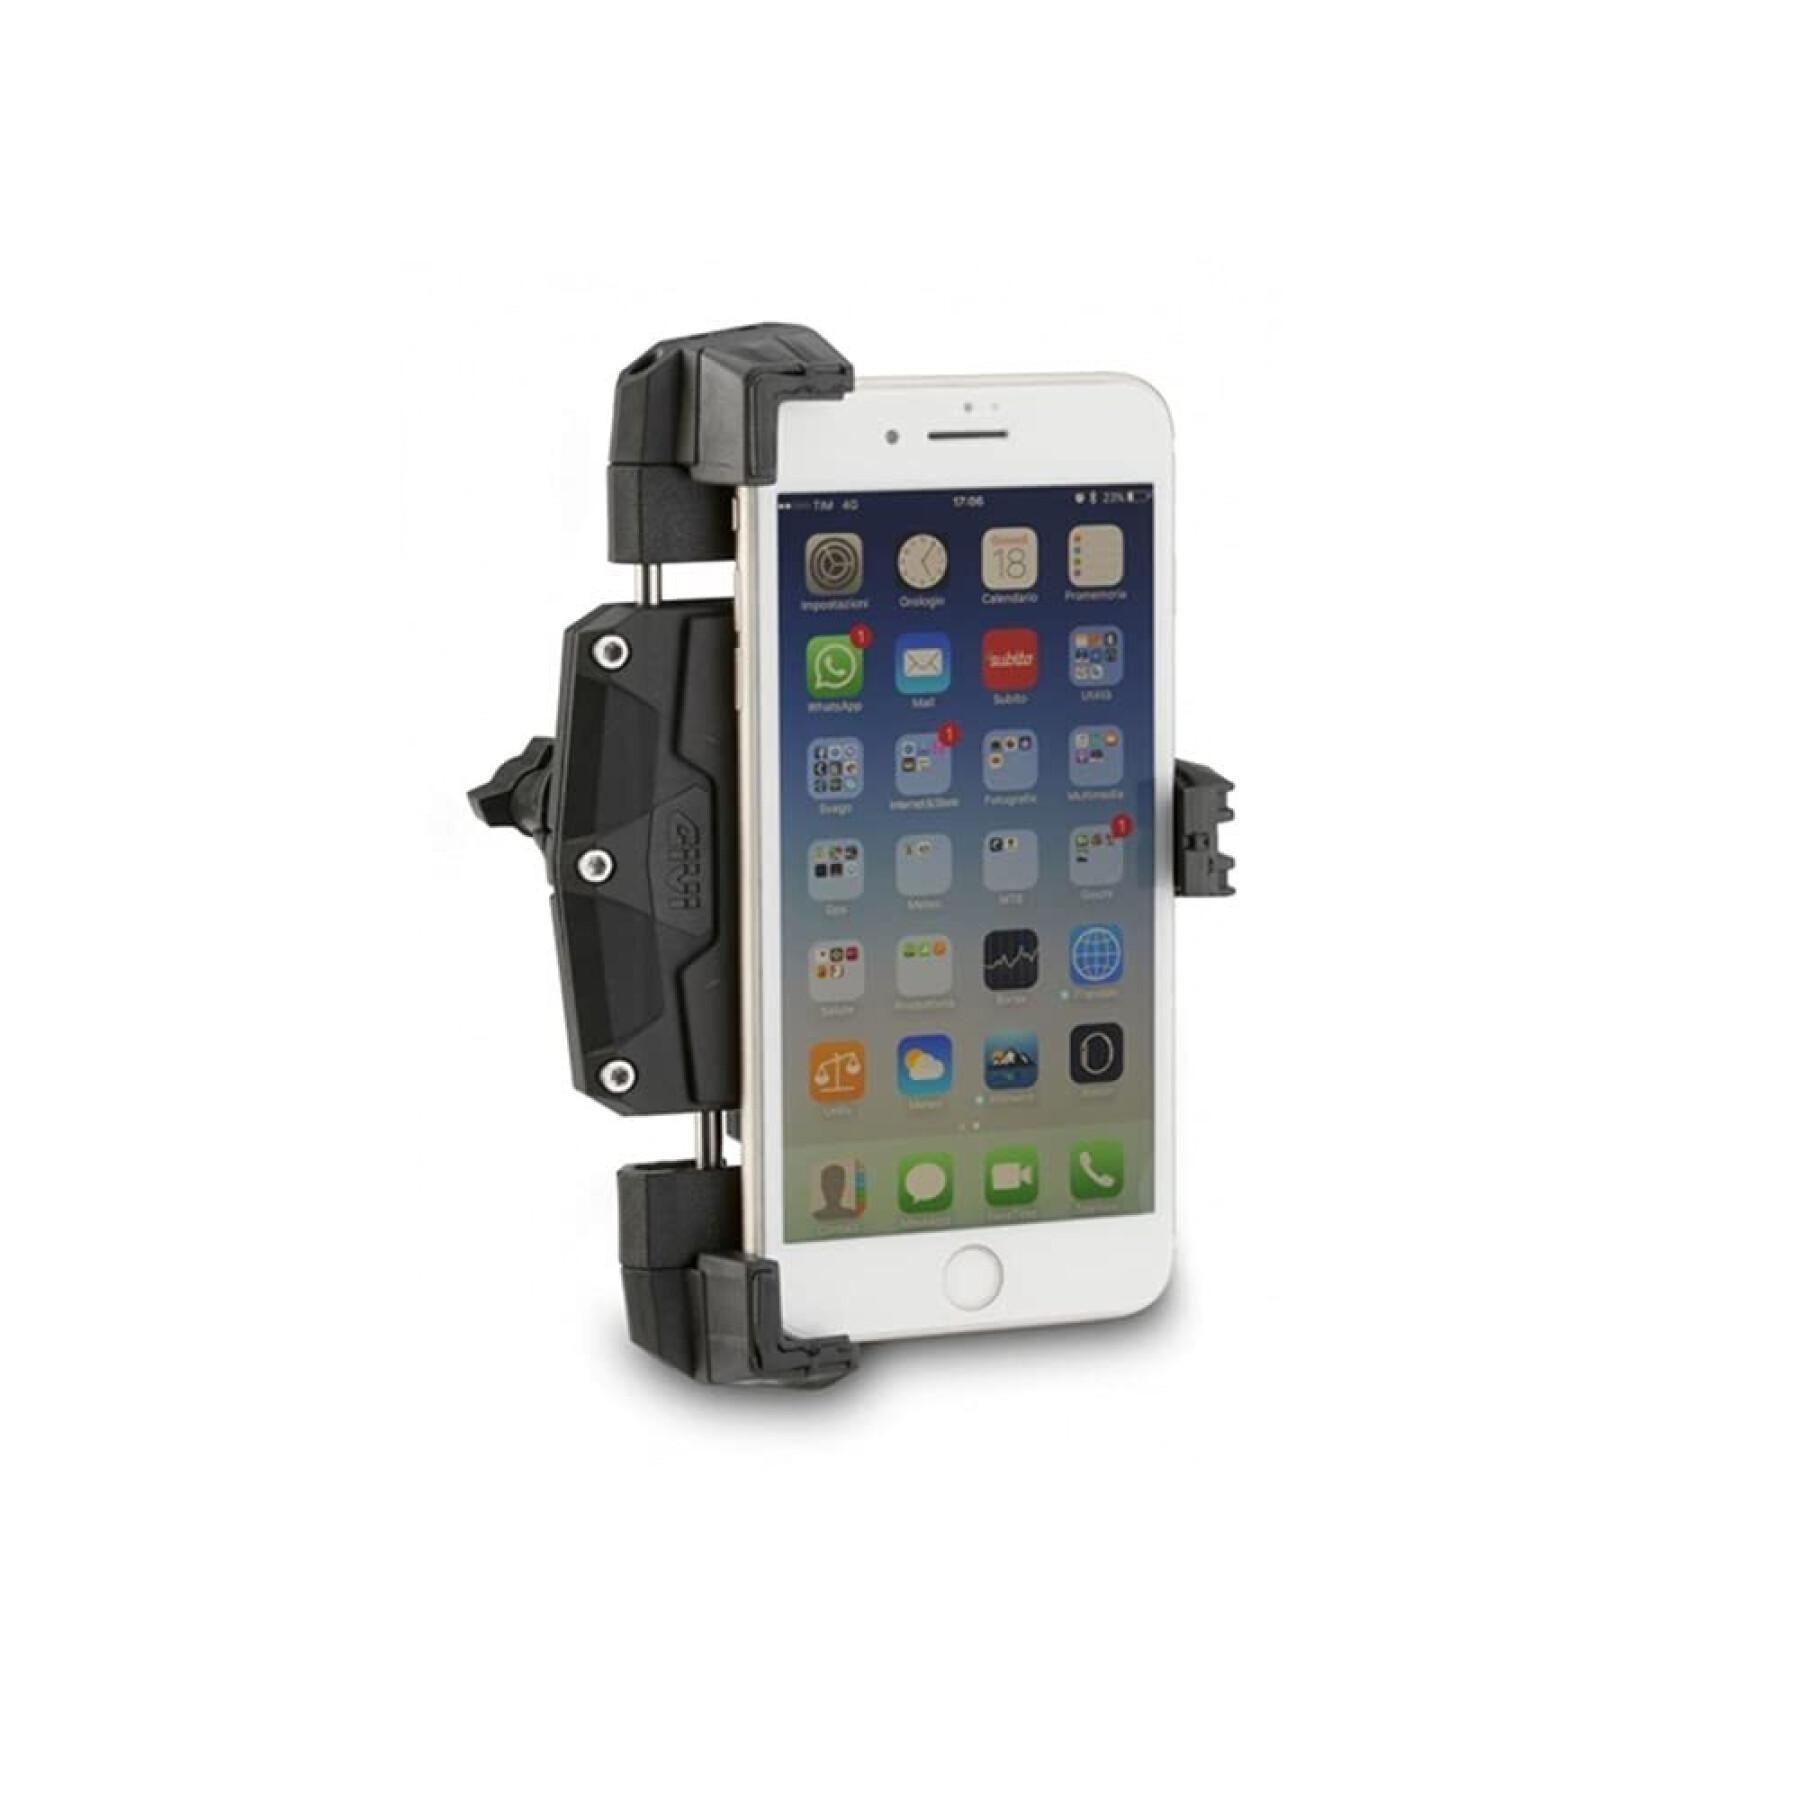 Smart clip s920l motorcycle smartphone holder Givi